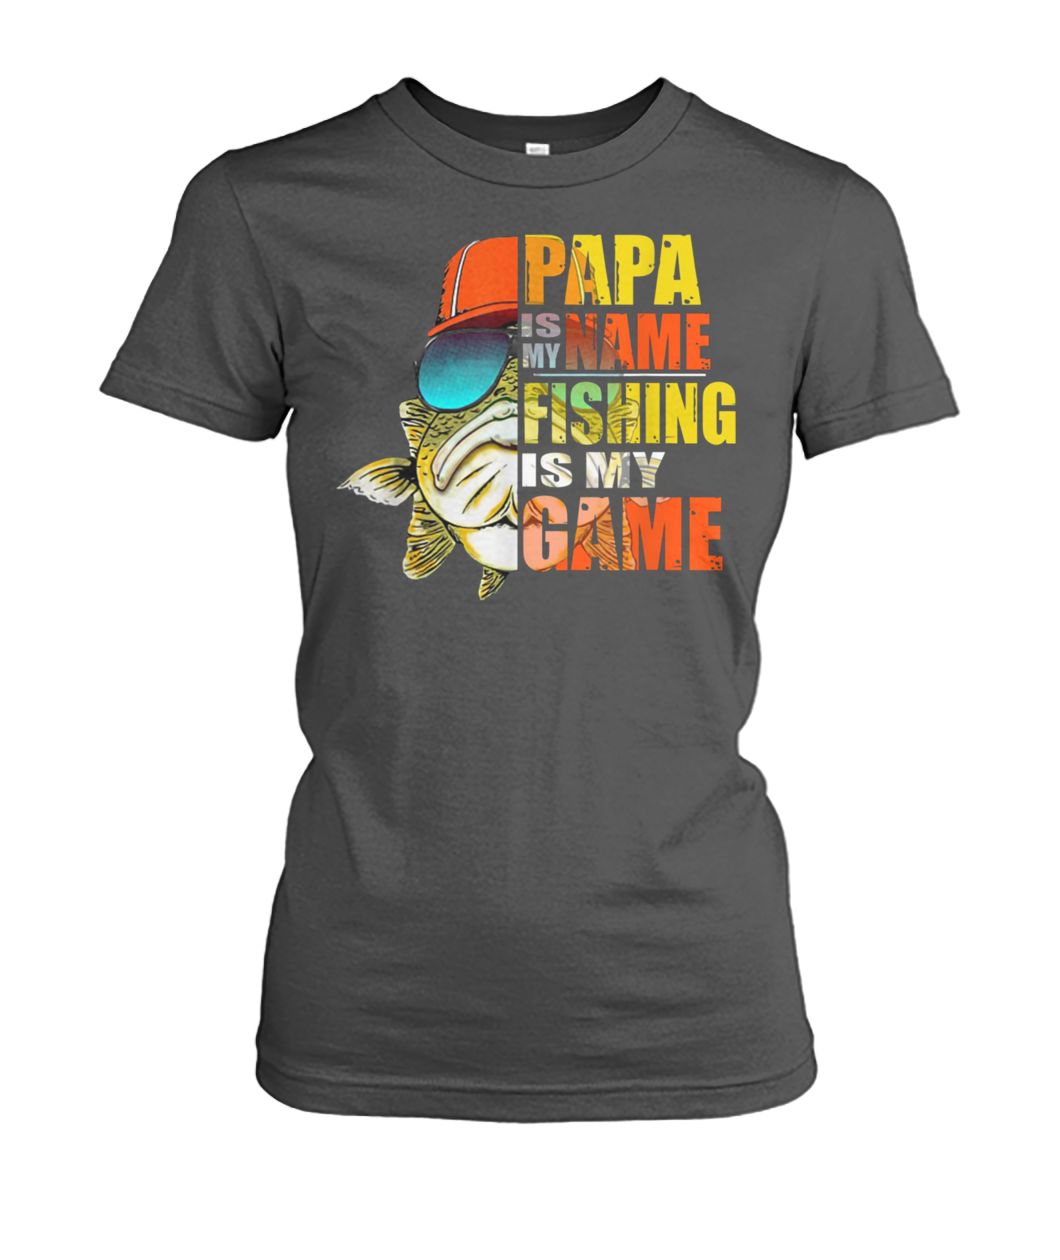 Papa is my name fishing is my game women's crew tee